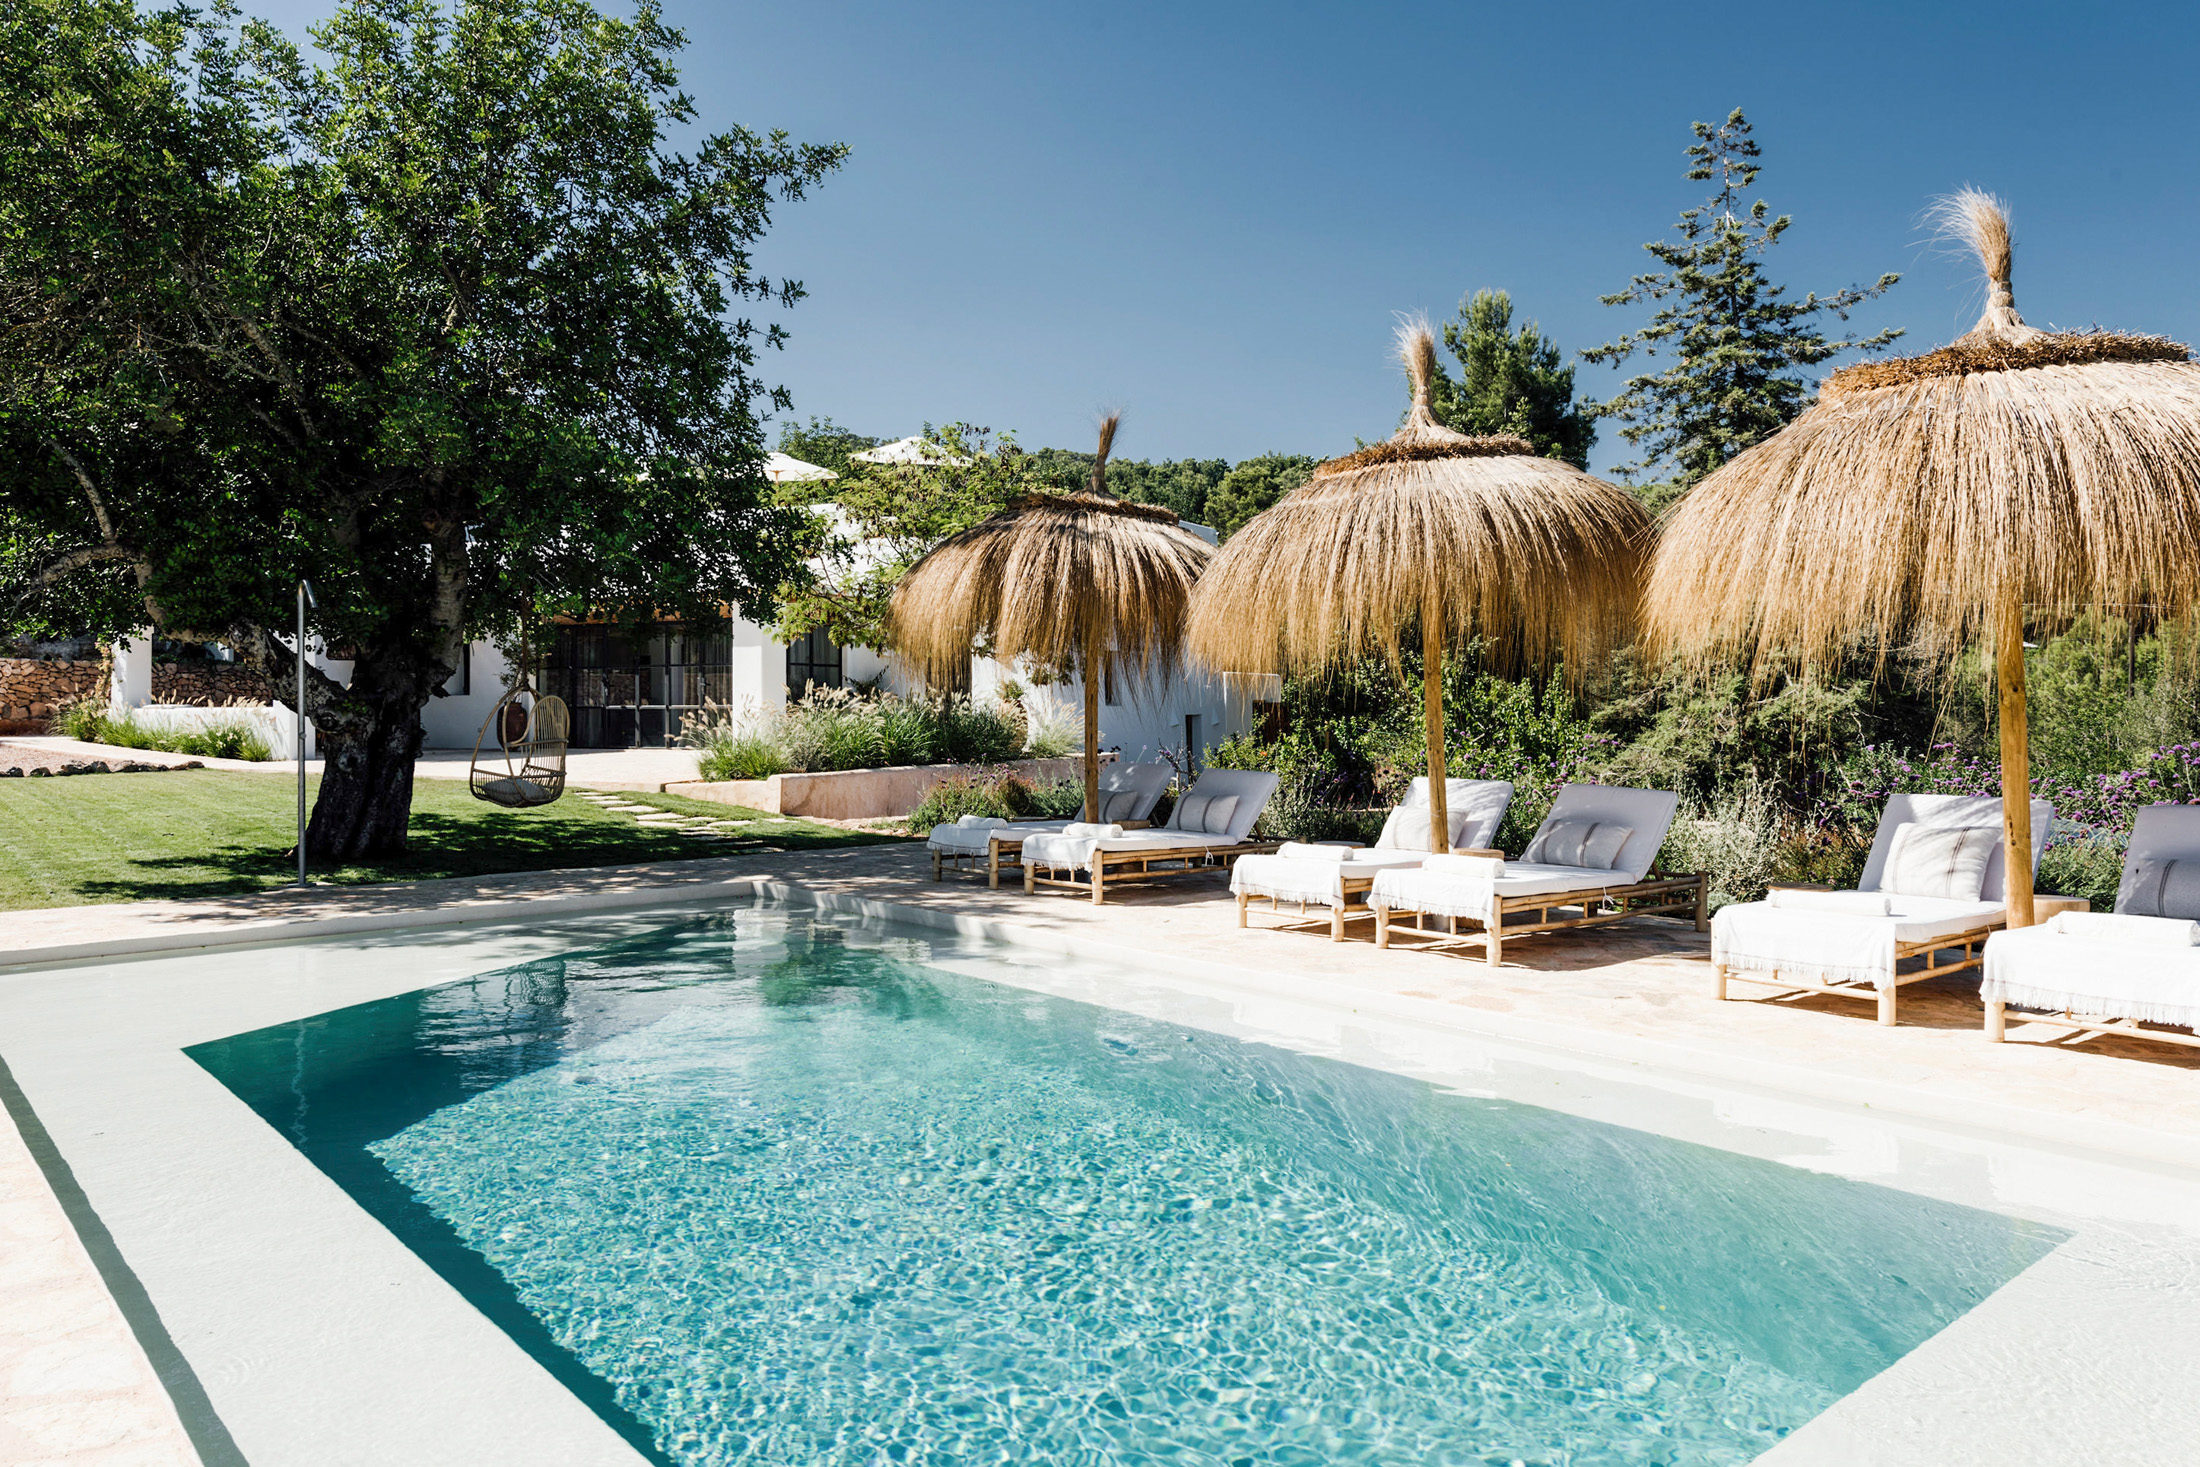 Swimming pool of a villa for sale in central Ibiza